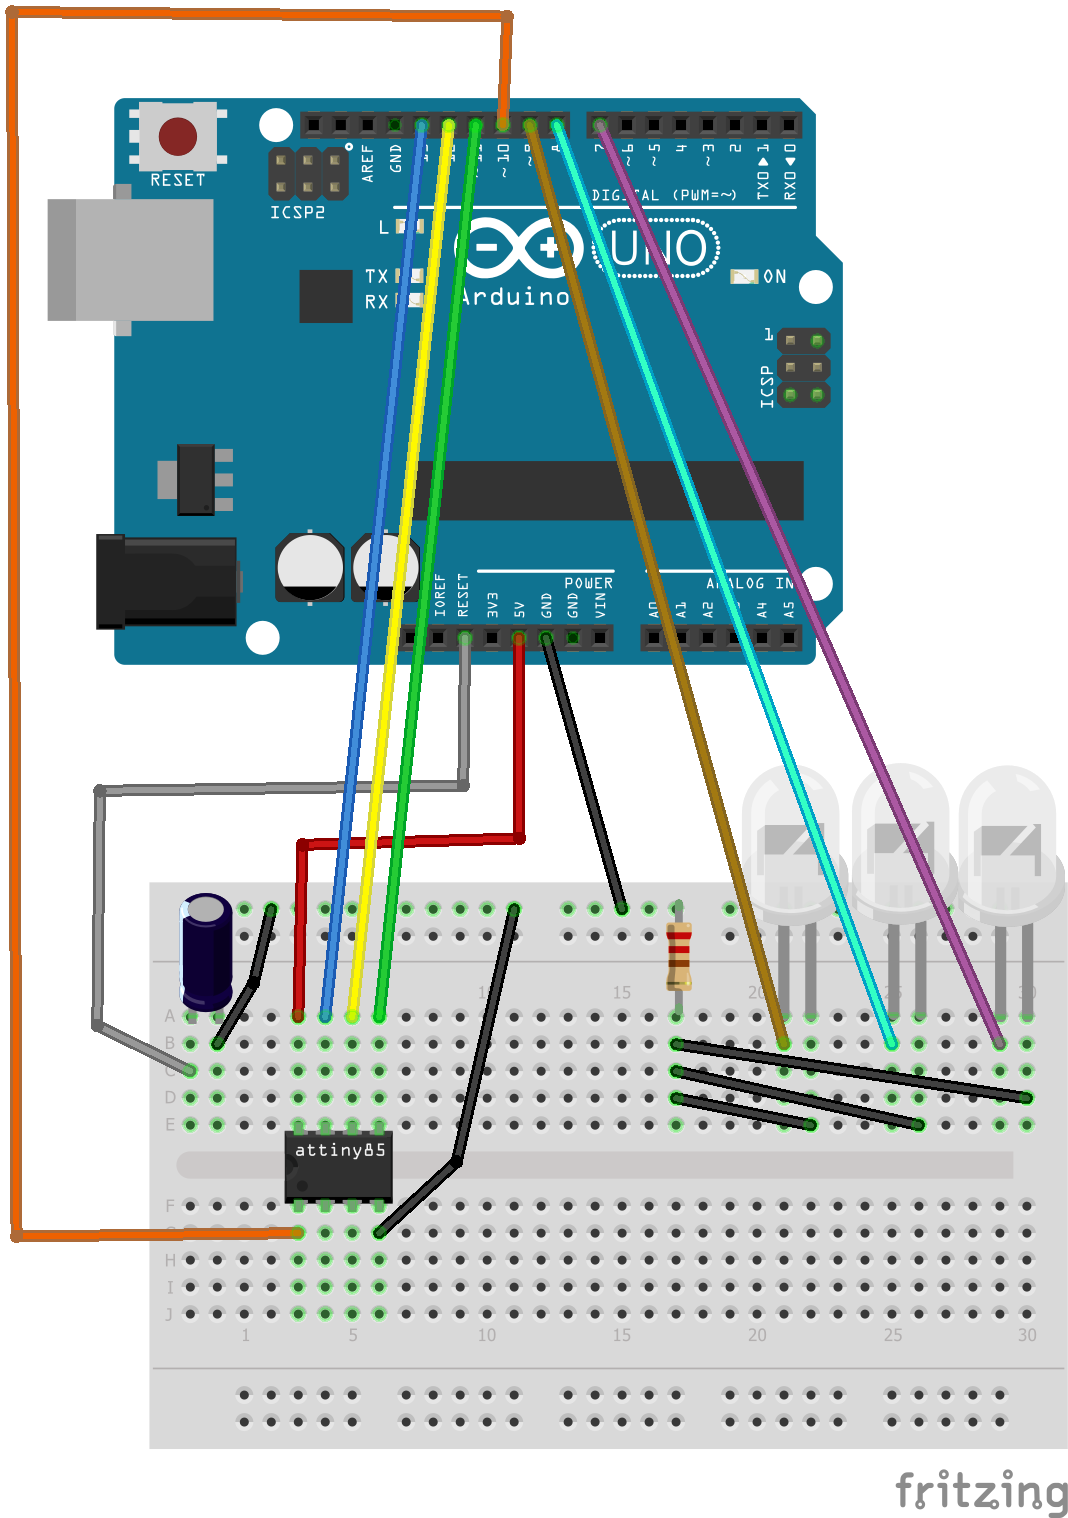 How to program ATtiny85 with Arduino UNO Easy way - Arduino Circuit